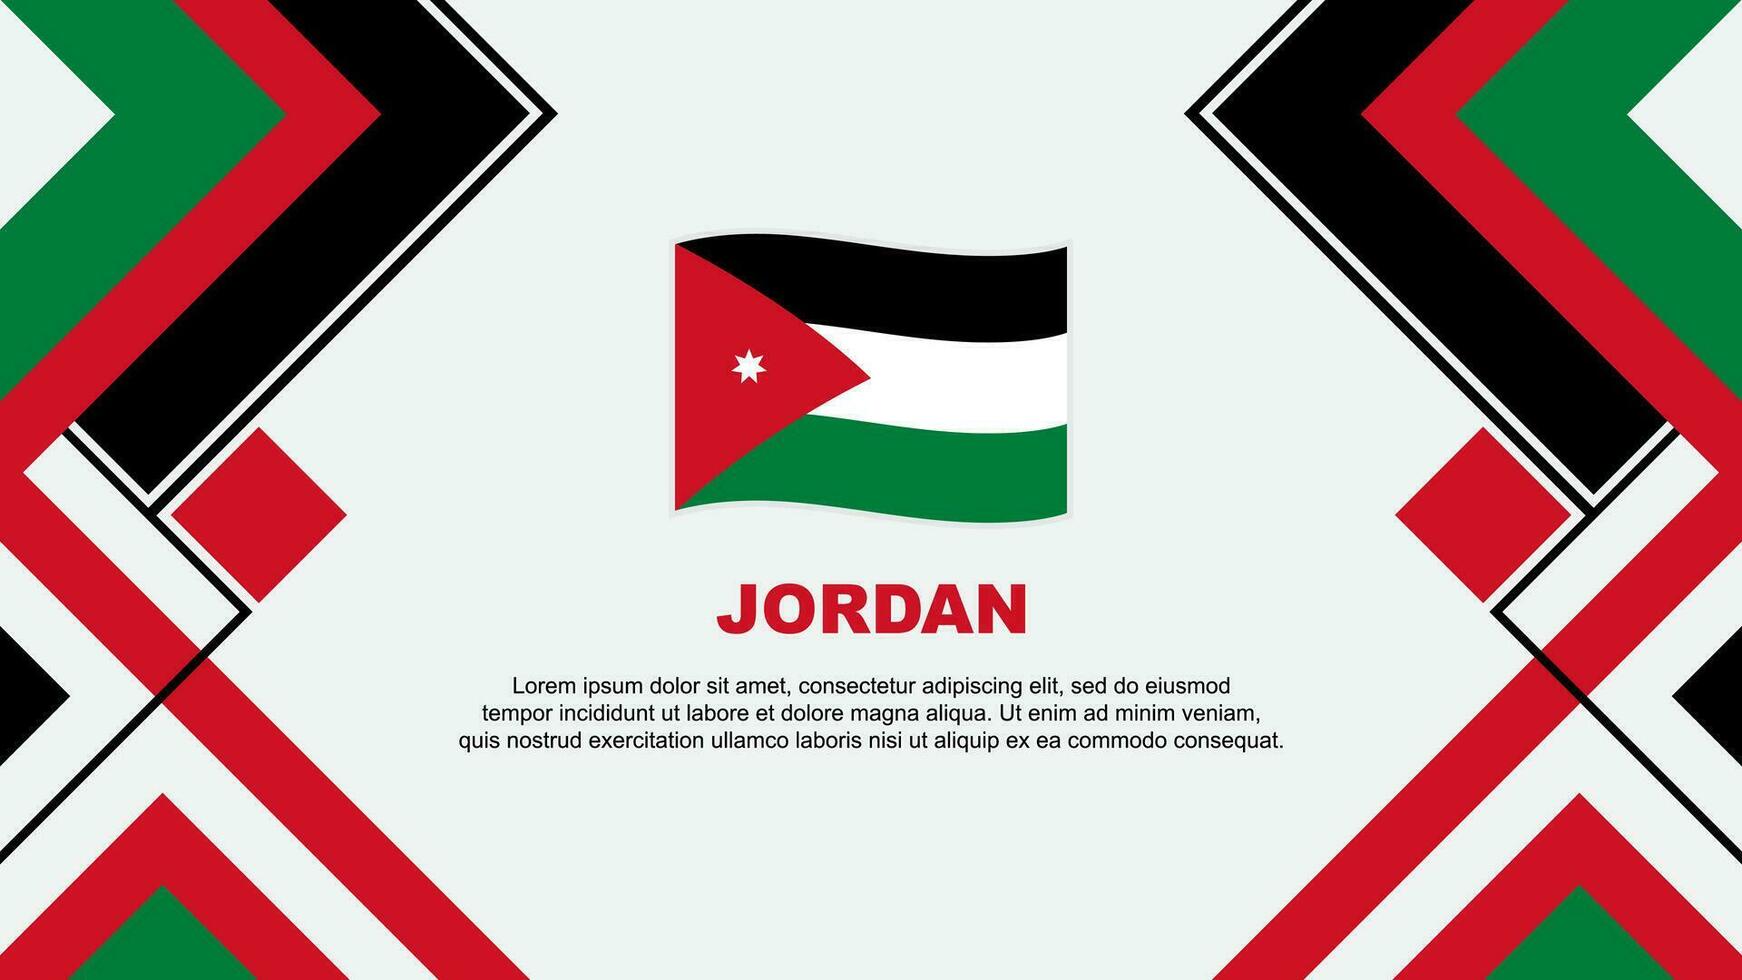 Jordan Flag Abstract Background Design Template. Jordan Independence Day Banner Wallpaper Vector Illustration. Jordan Banner